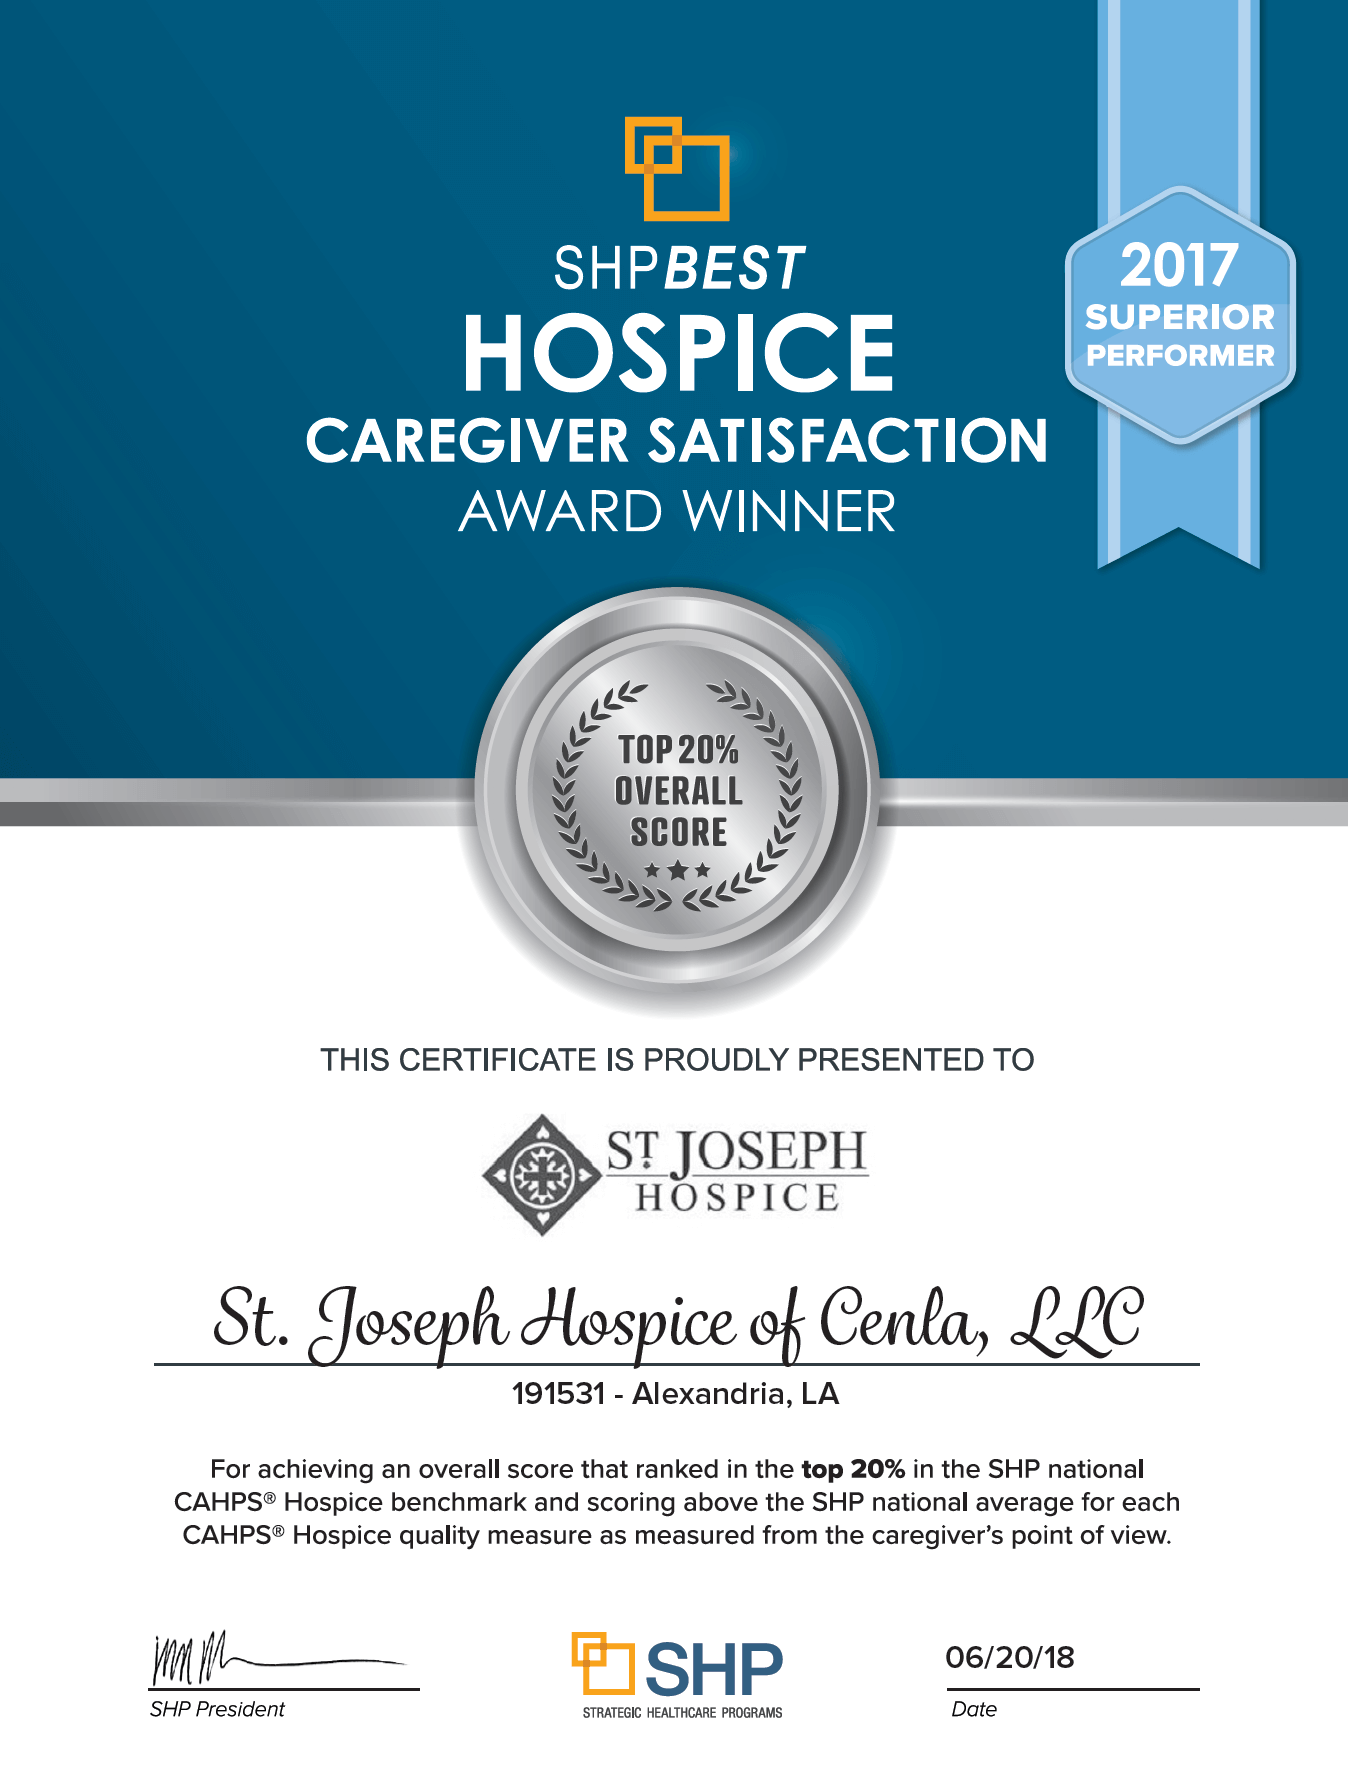 St. Joseph Hospice of CENLA Receives “Best Superior Performer” Award